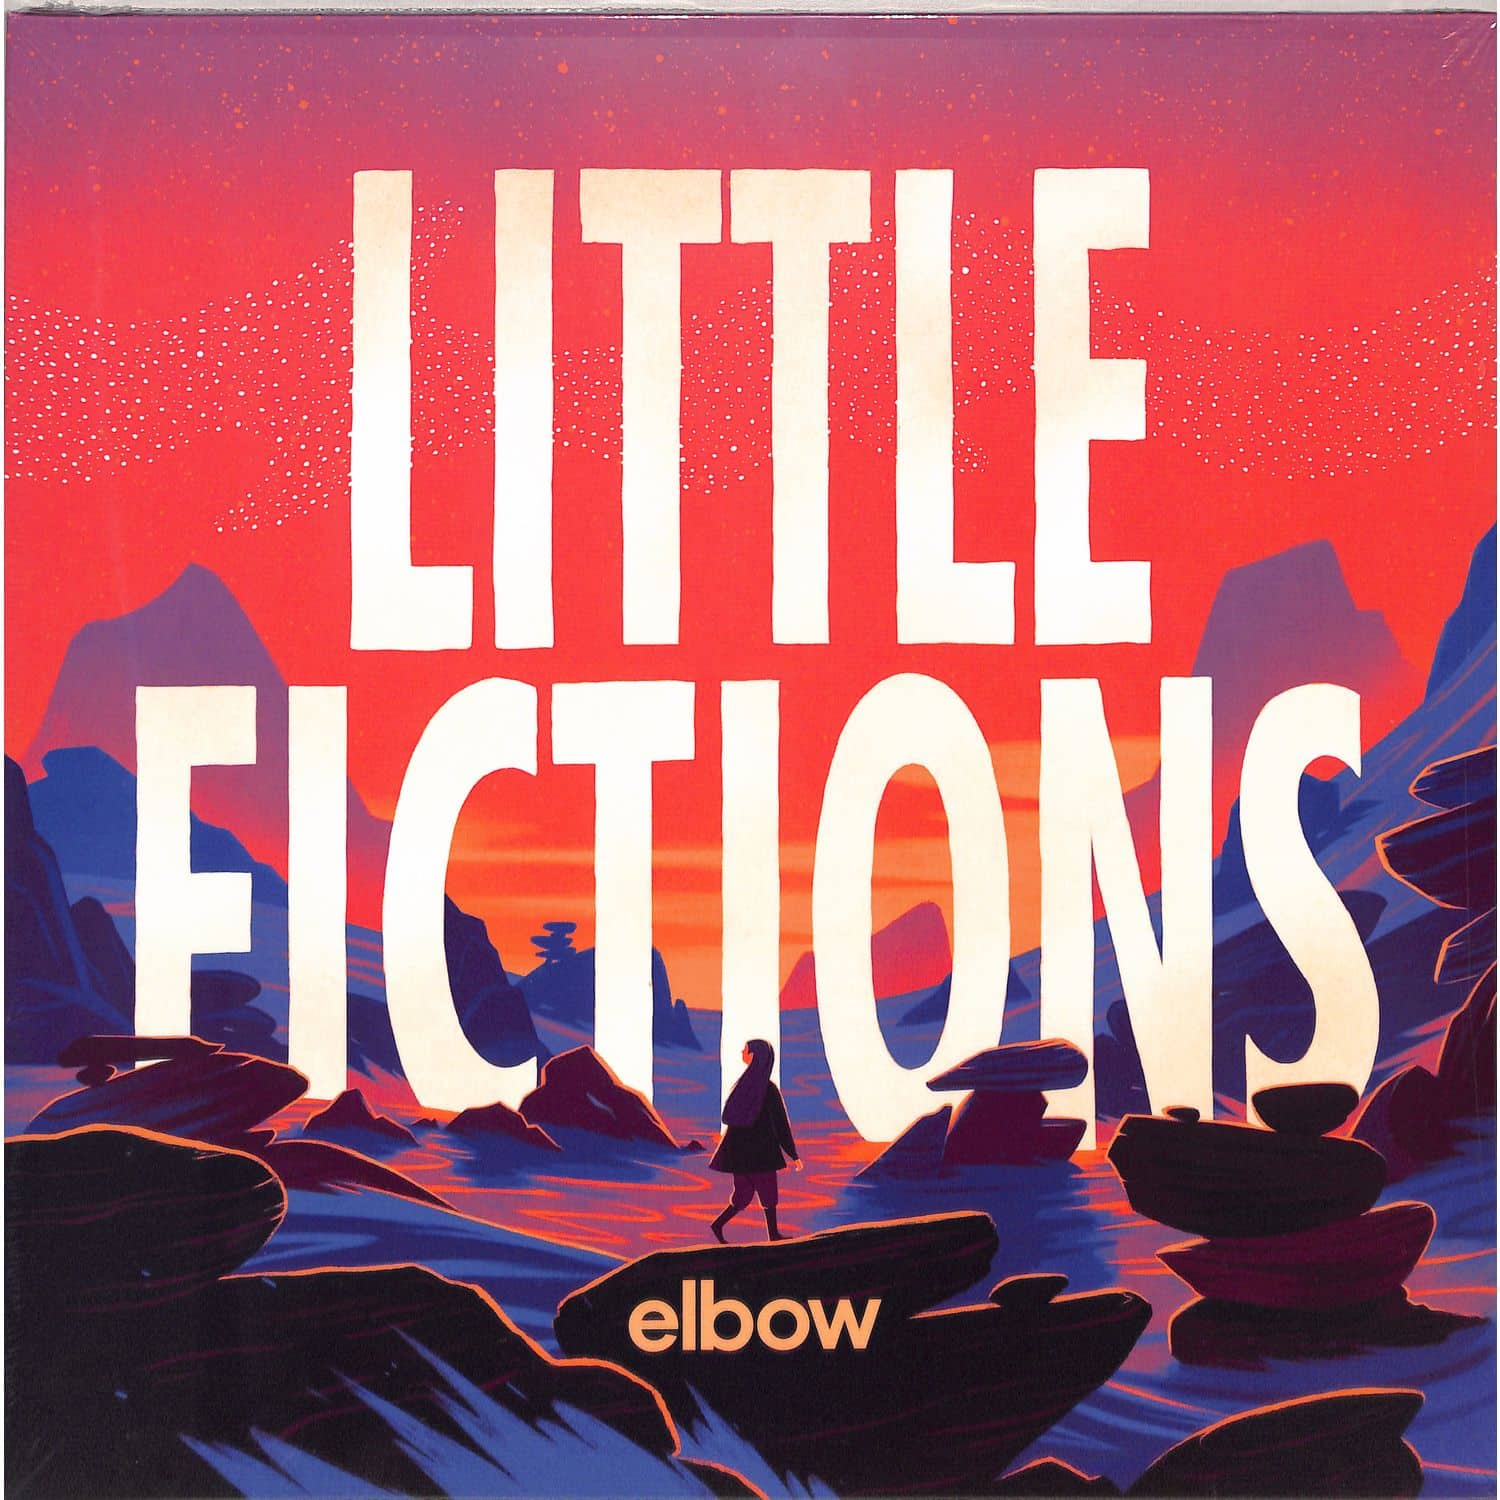 Elbow - LITTLE FICTIONS 